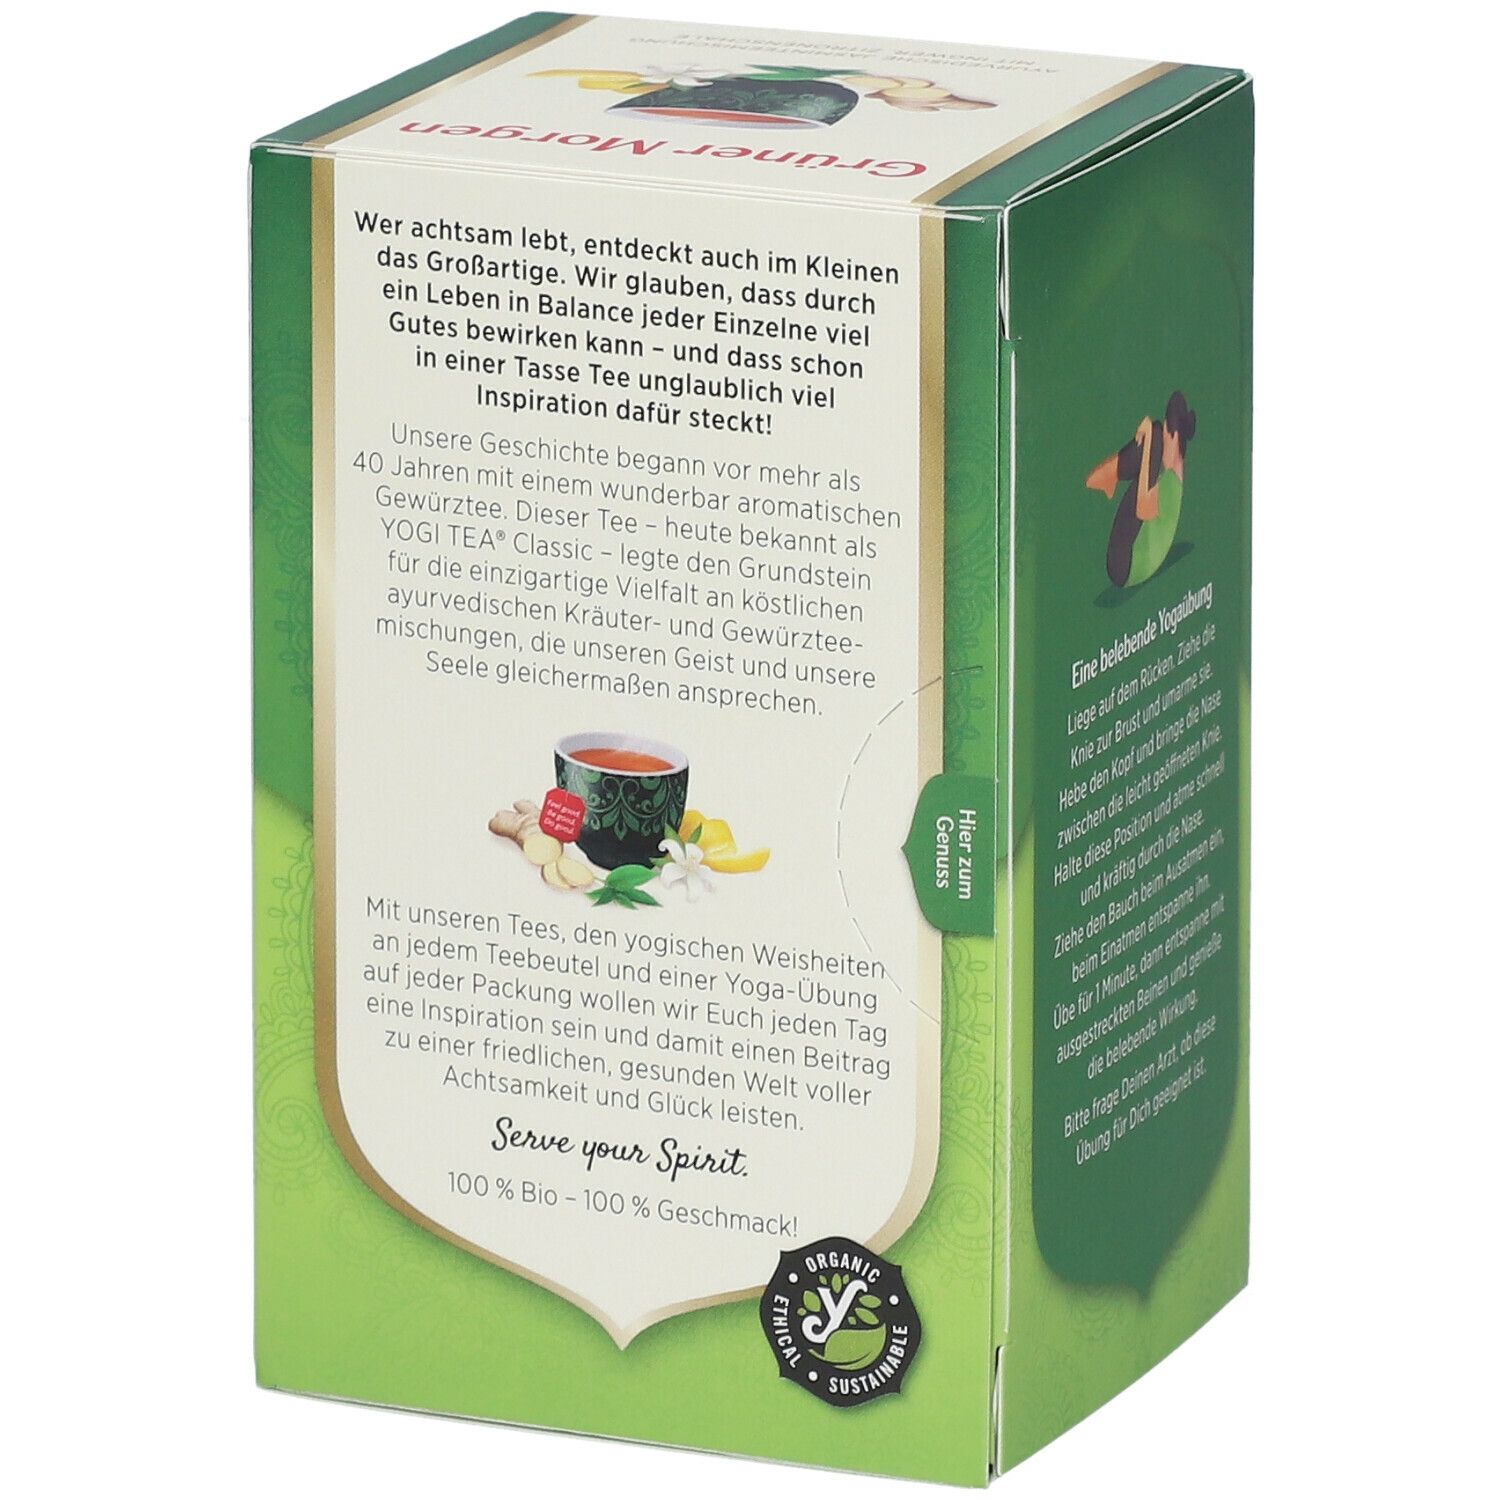 YOGI TEA® Grüner Morgen, Bio Jasmin-Tee